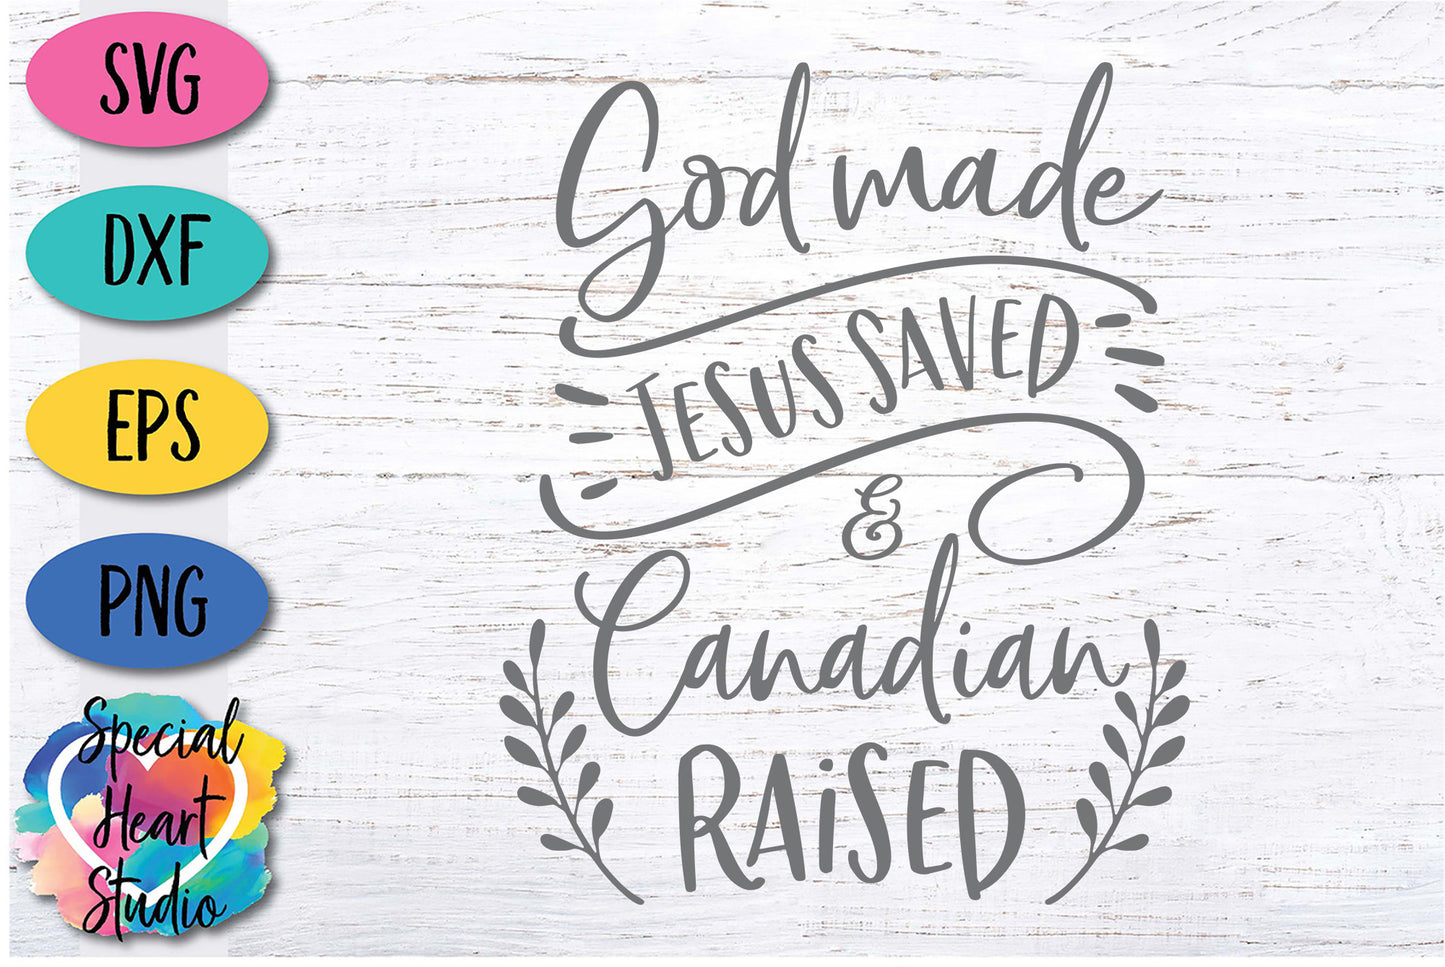 God Made, Jesus Saved and Canadian Raised